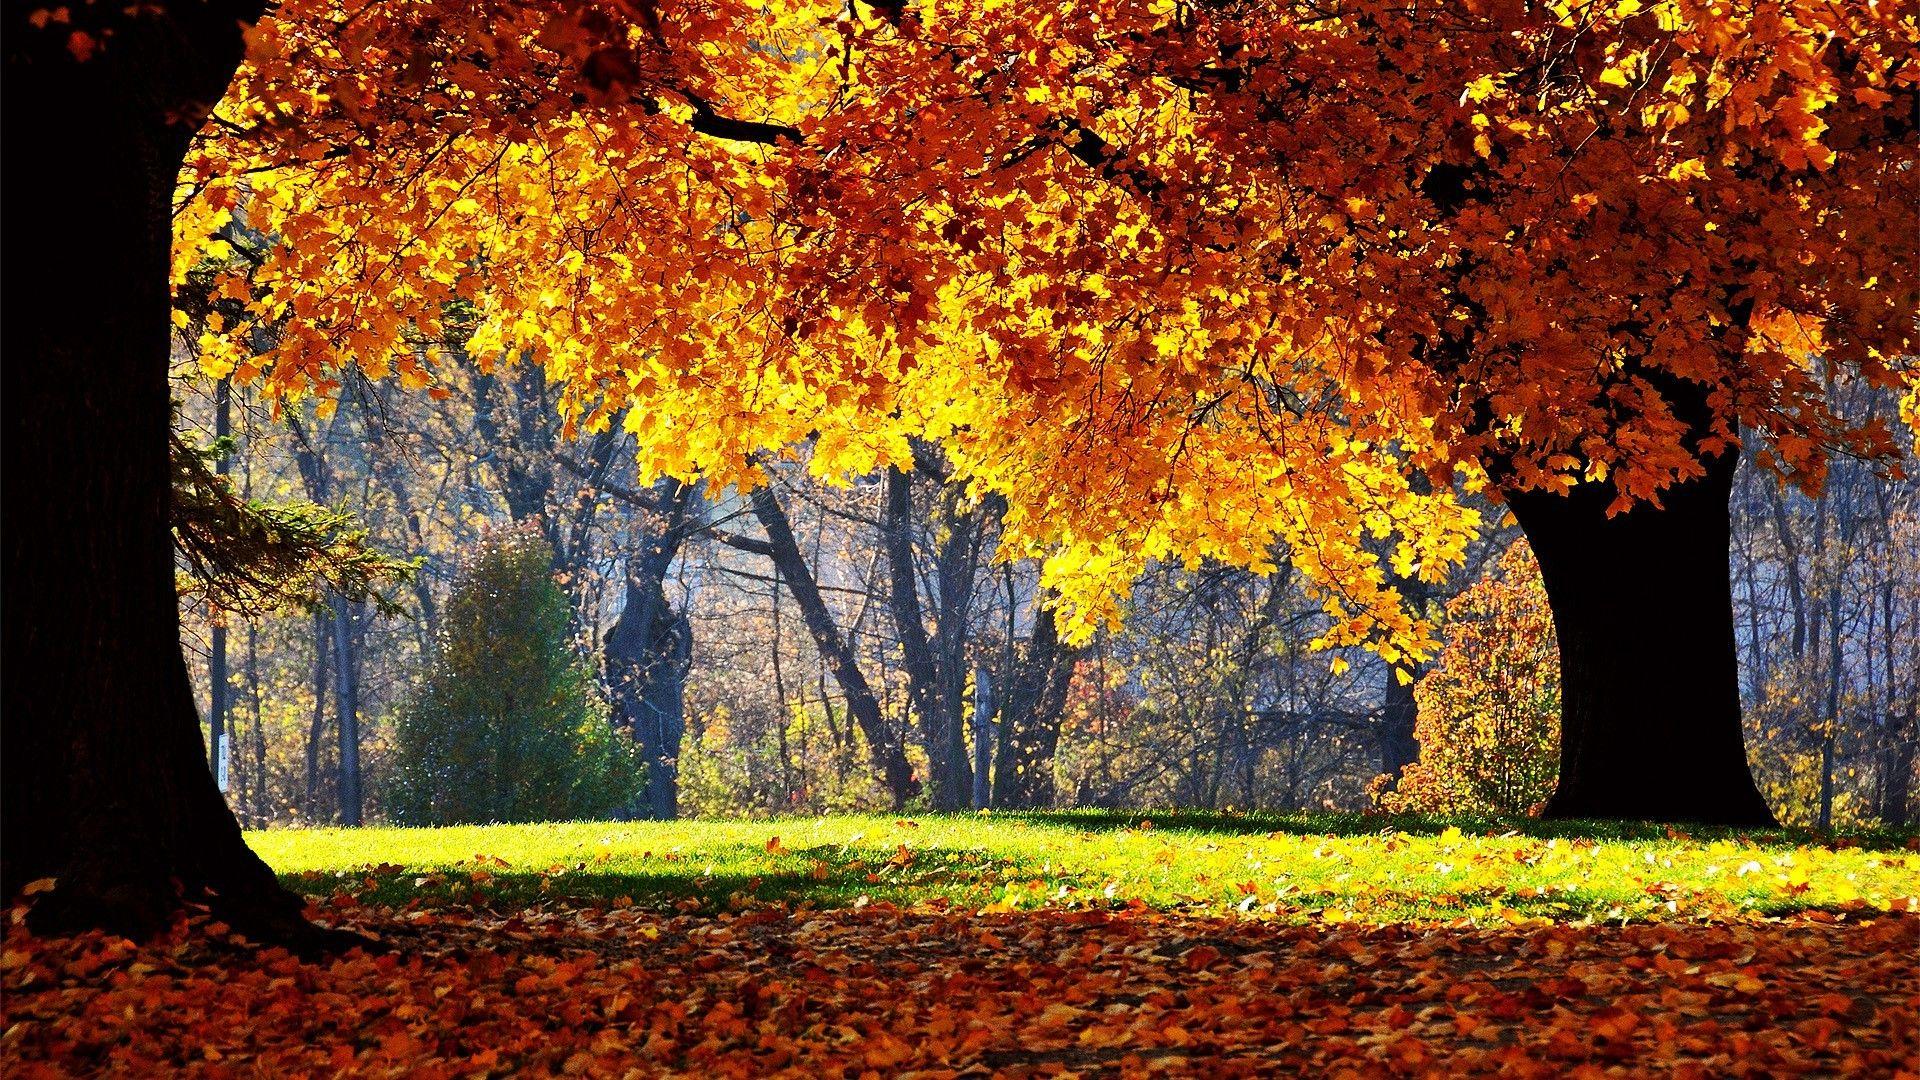 Sunny Autumn. Autumn trees, Autumn landscape, Fall picture nature